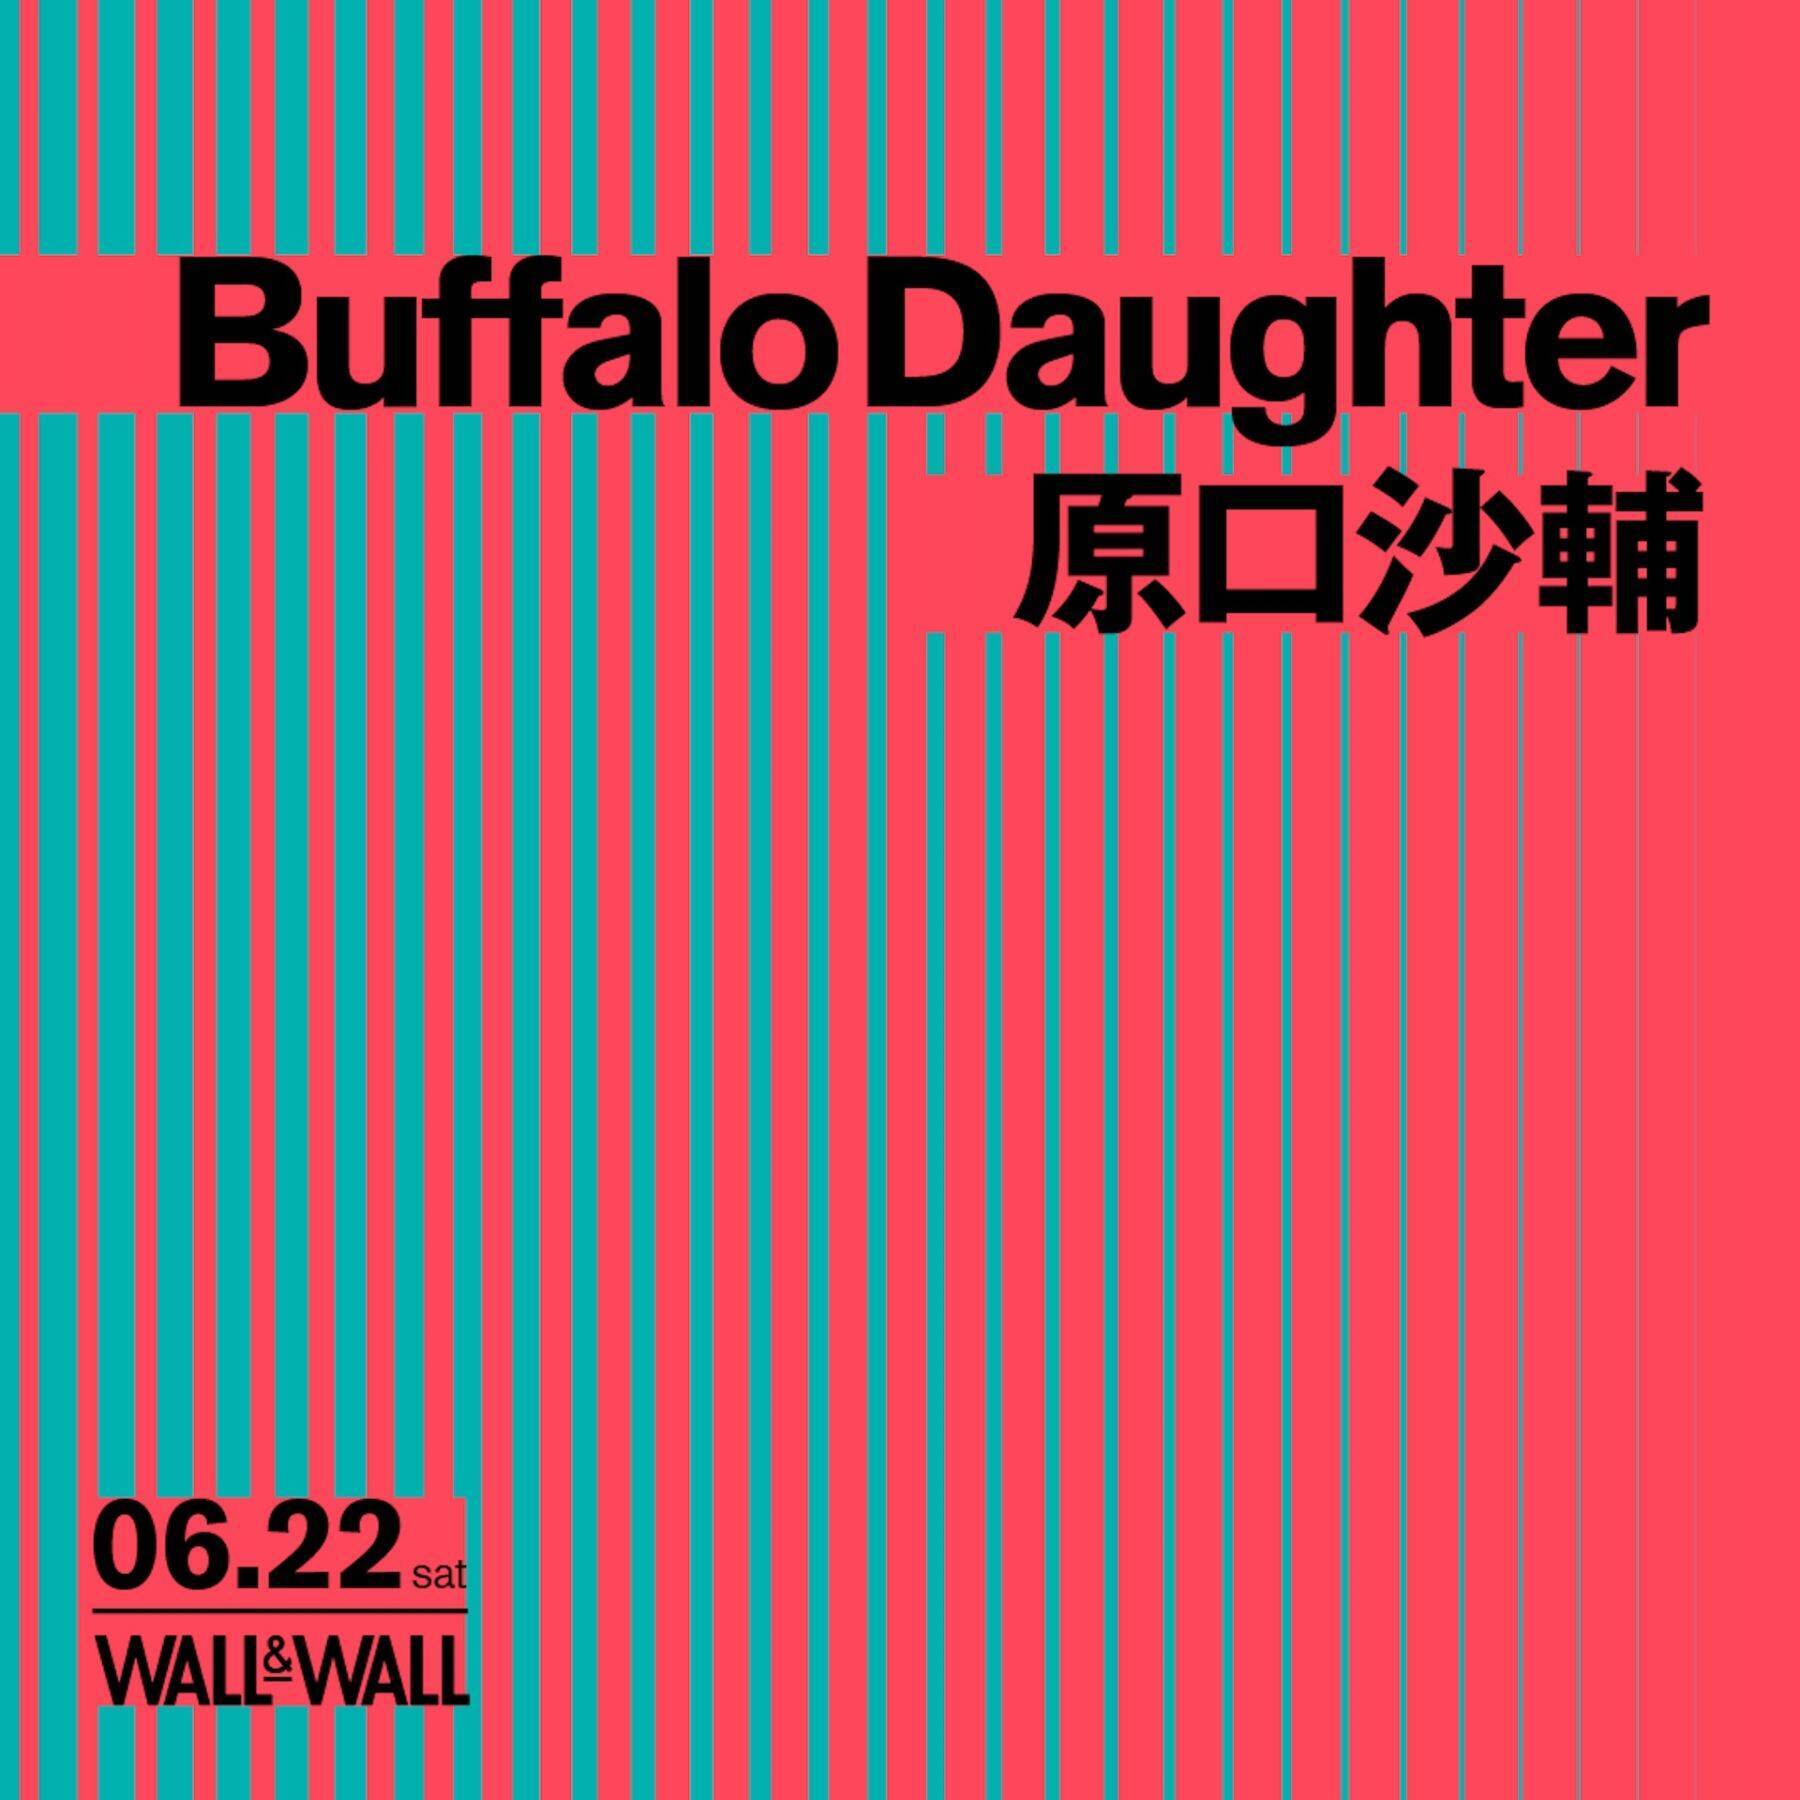 Buffalo Daughterと原口沙輔による2マンライブが表参道WALL&WALLにて開催